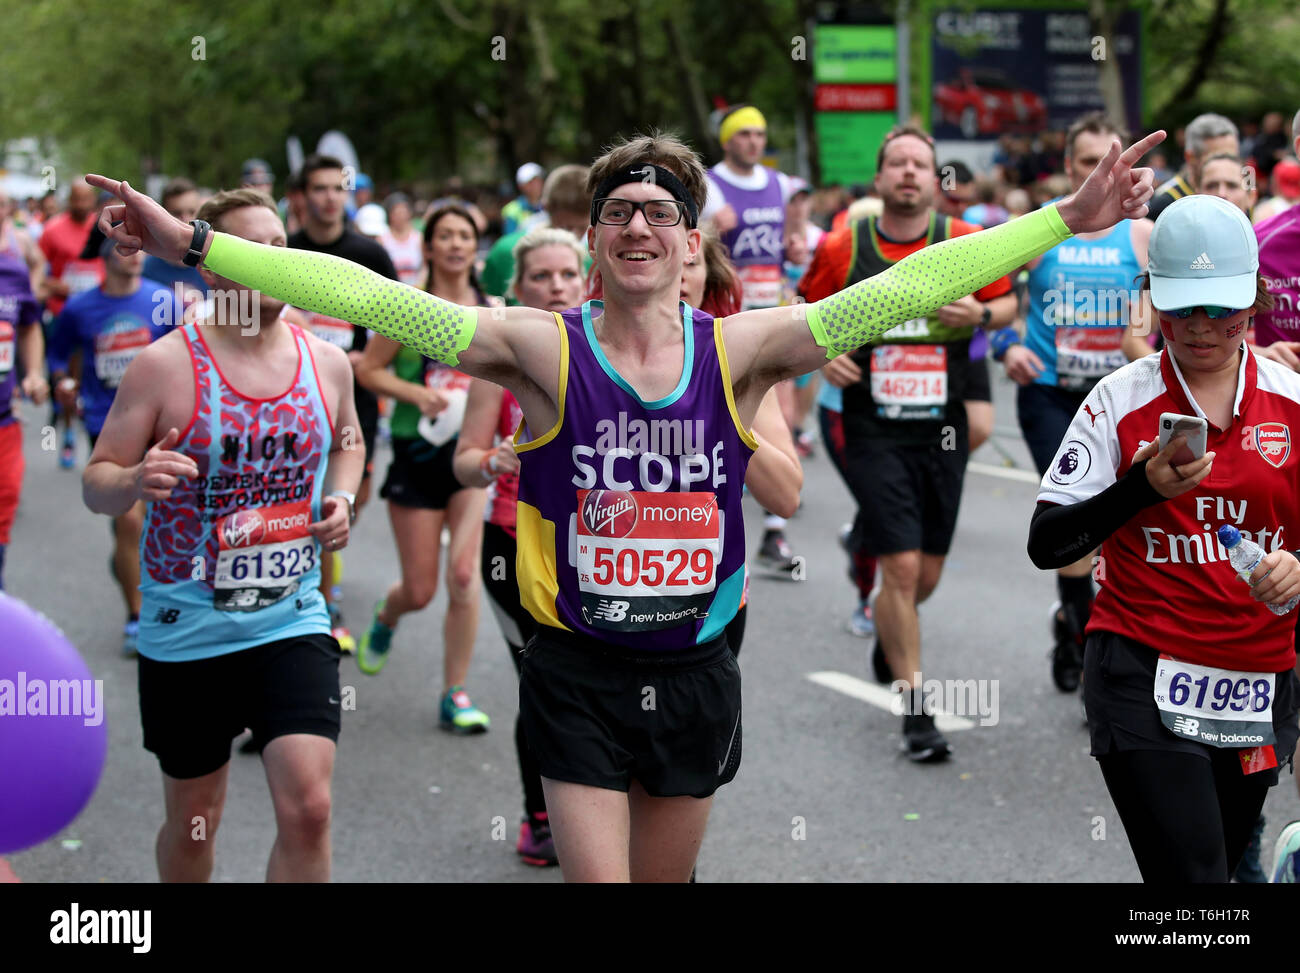 London England. Sunday April 28 2019. Participants running the London marathon. Stock Photo